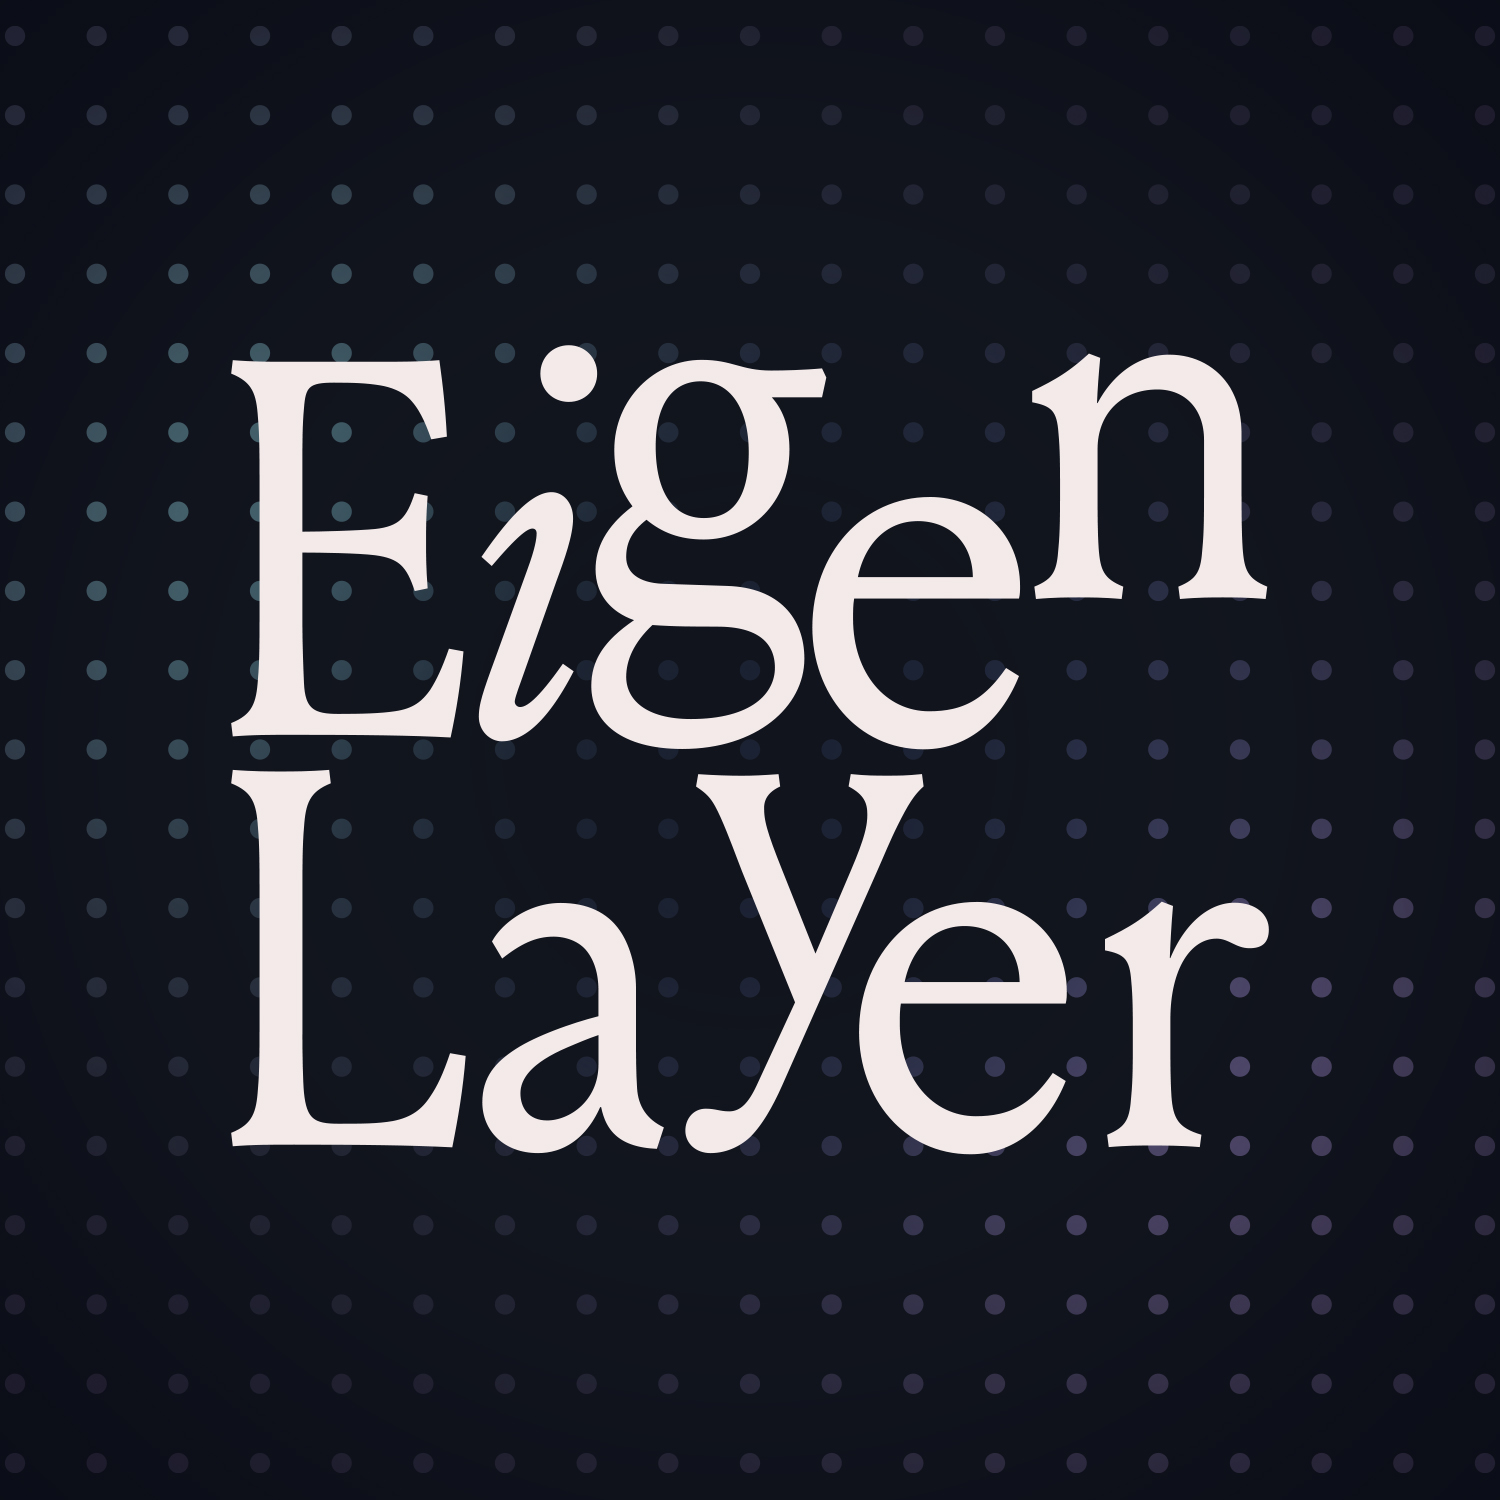 01Node Validator Joins Eigenlayer As Operator For Stage 2 Of Testnet